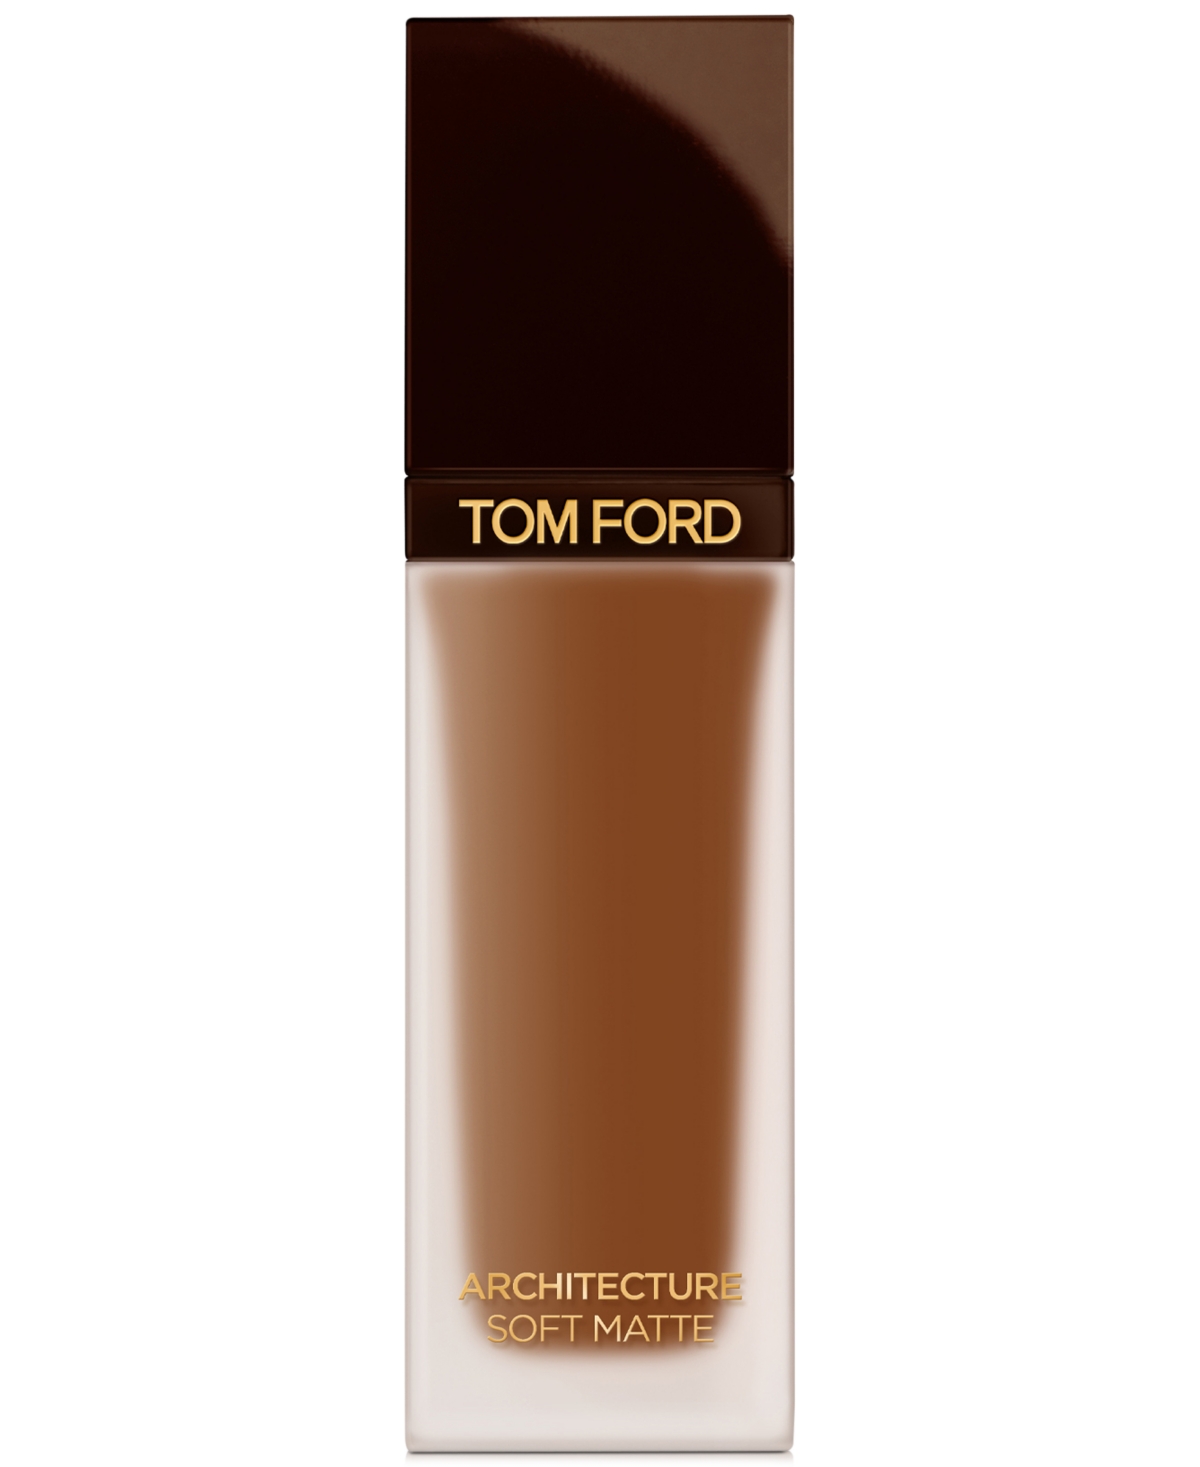 Shop Tom Ford Architecture Soft Matte Blurring Foundation In . Warm Nutmeg - Deep-rich